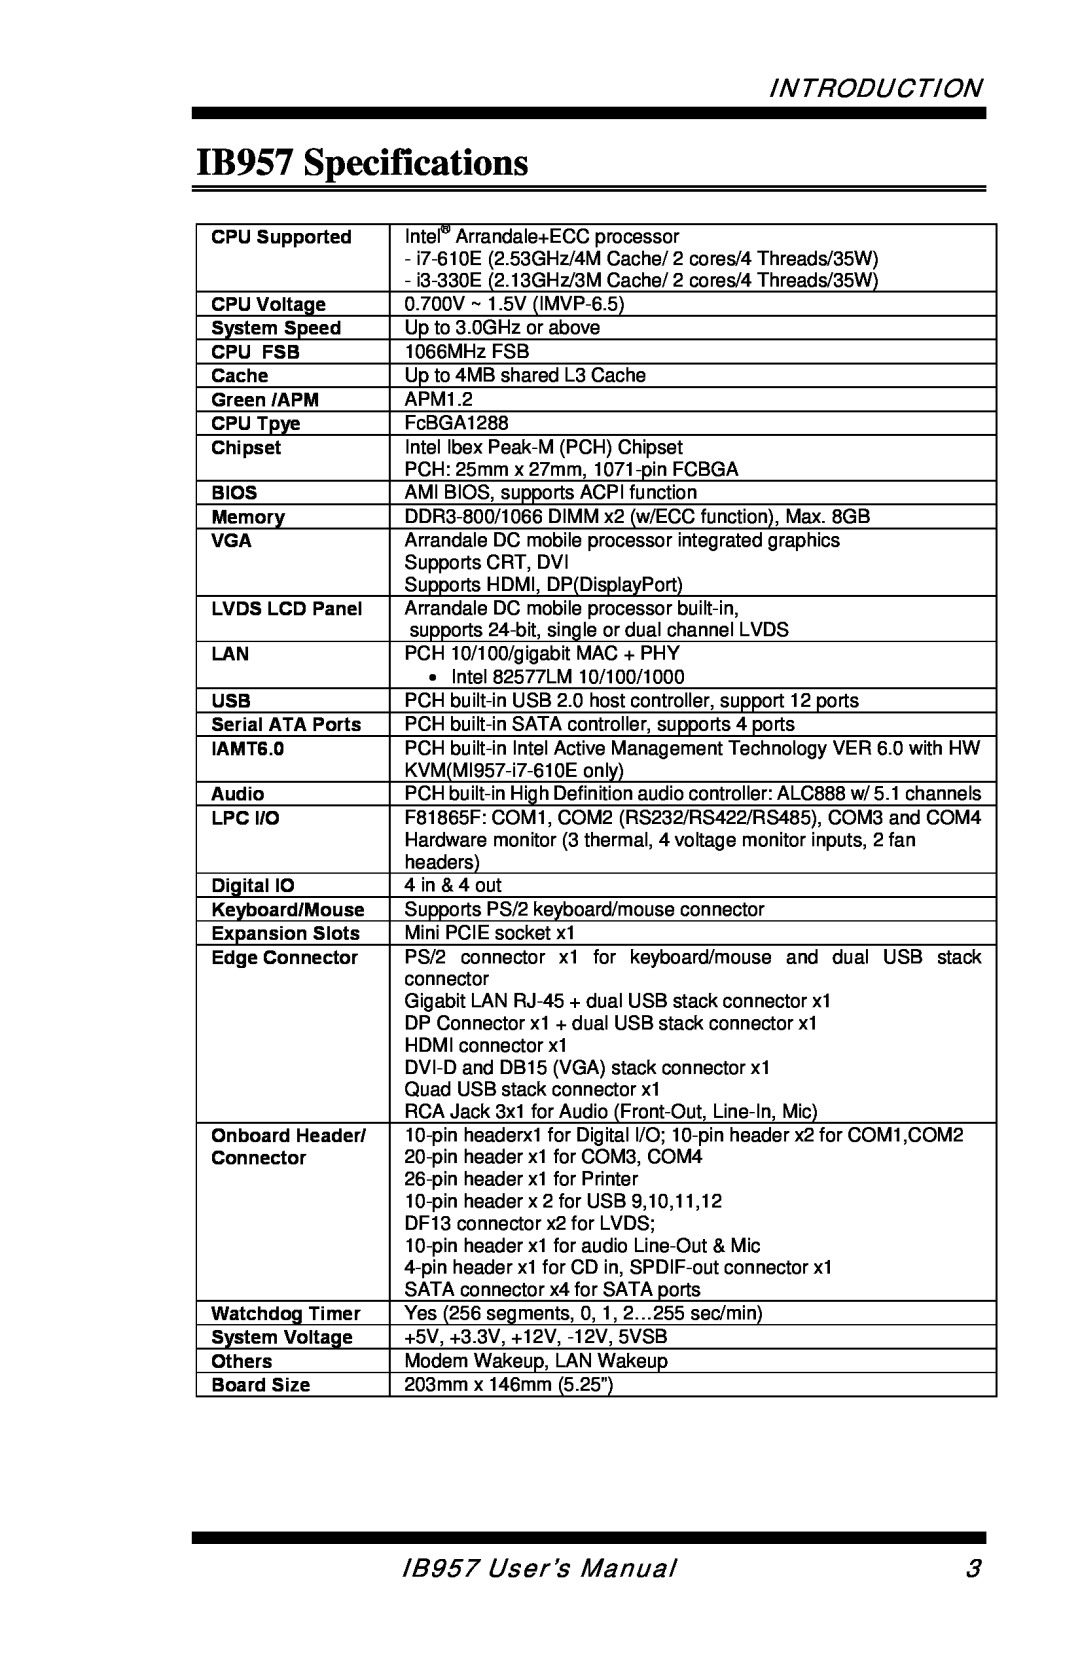 Intel user manual IB957 Specifications, Introduction, IB957 User’s Manual 